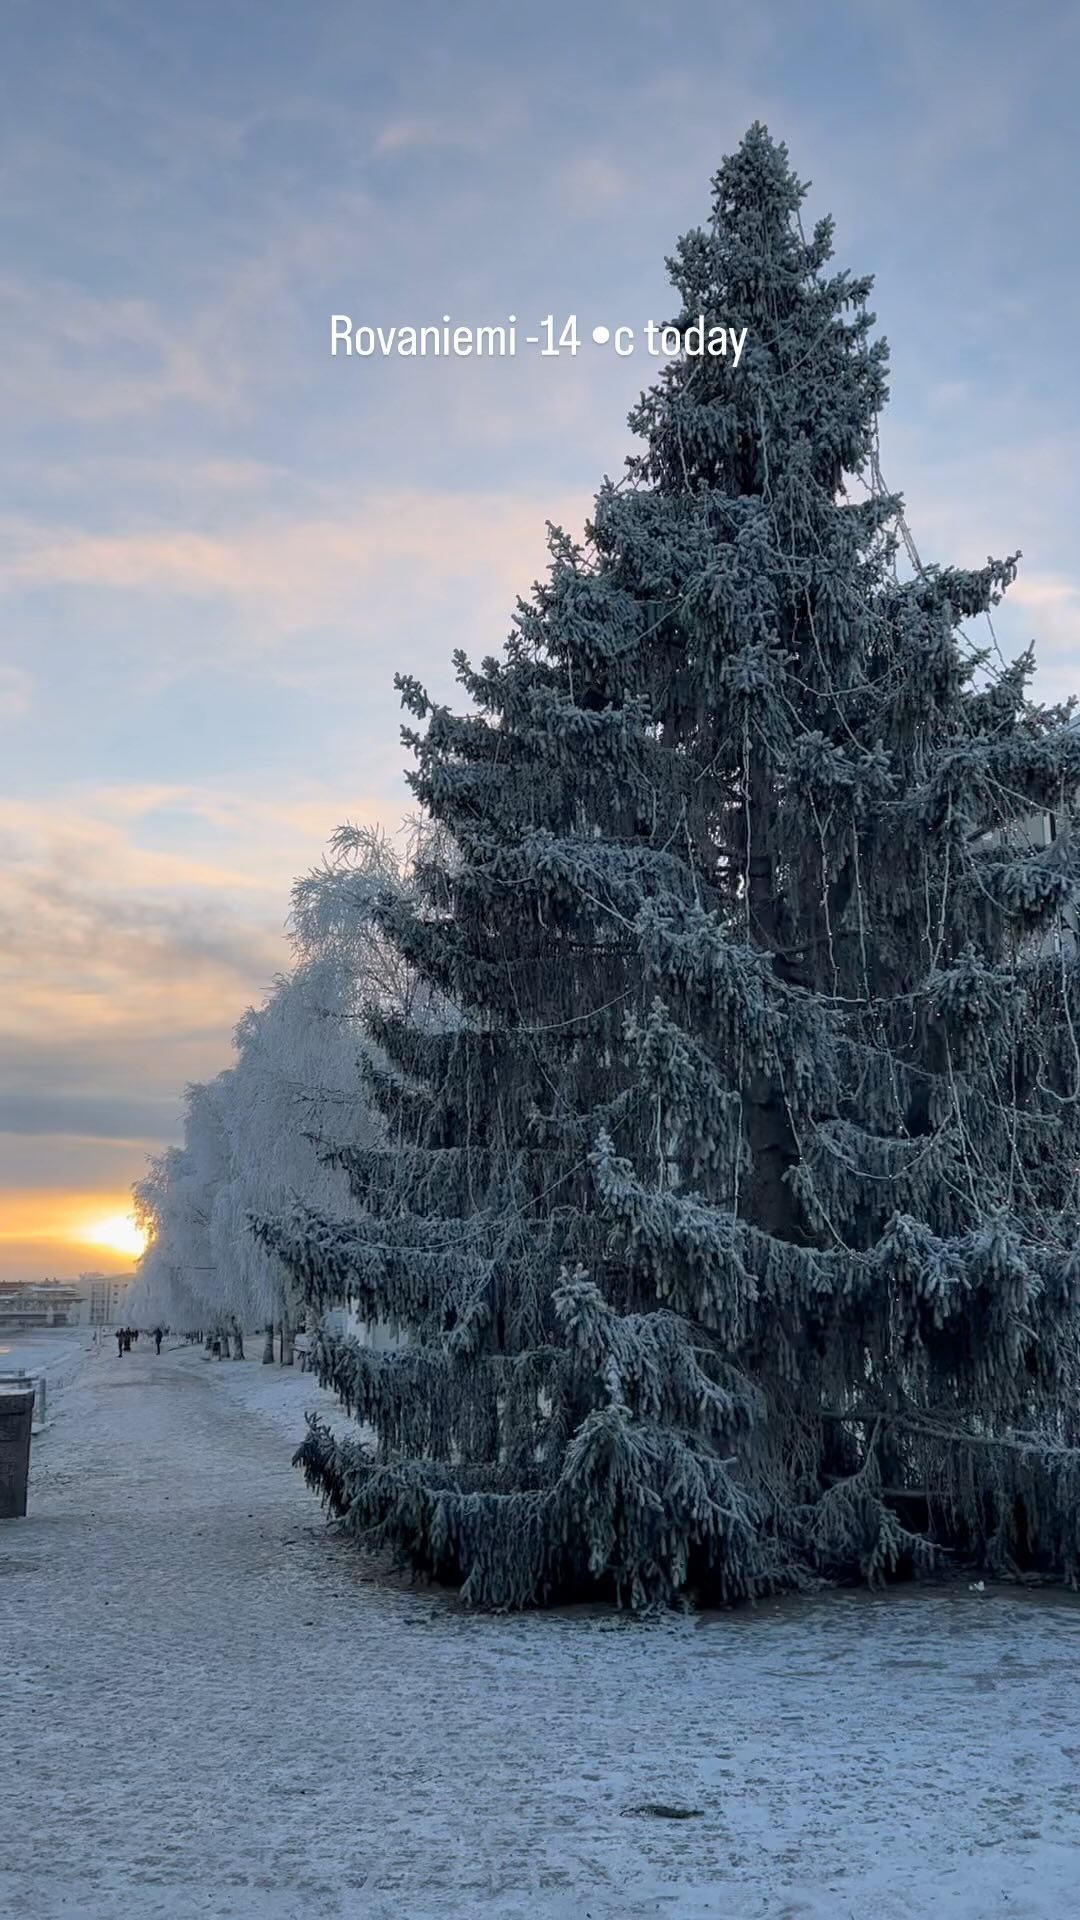 Cold and crispy winter day in Rovaniemi #visitrovaniemi #winter #winterwonderland #visitfinland #lapland